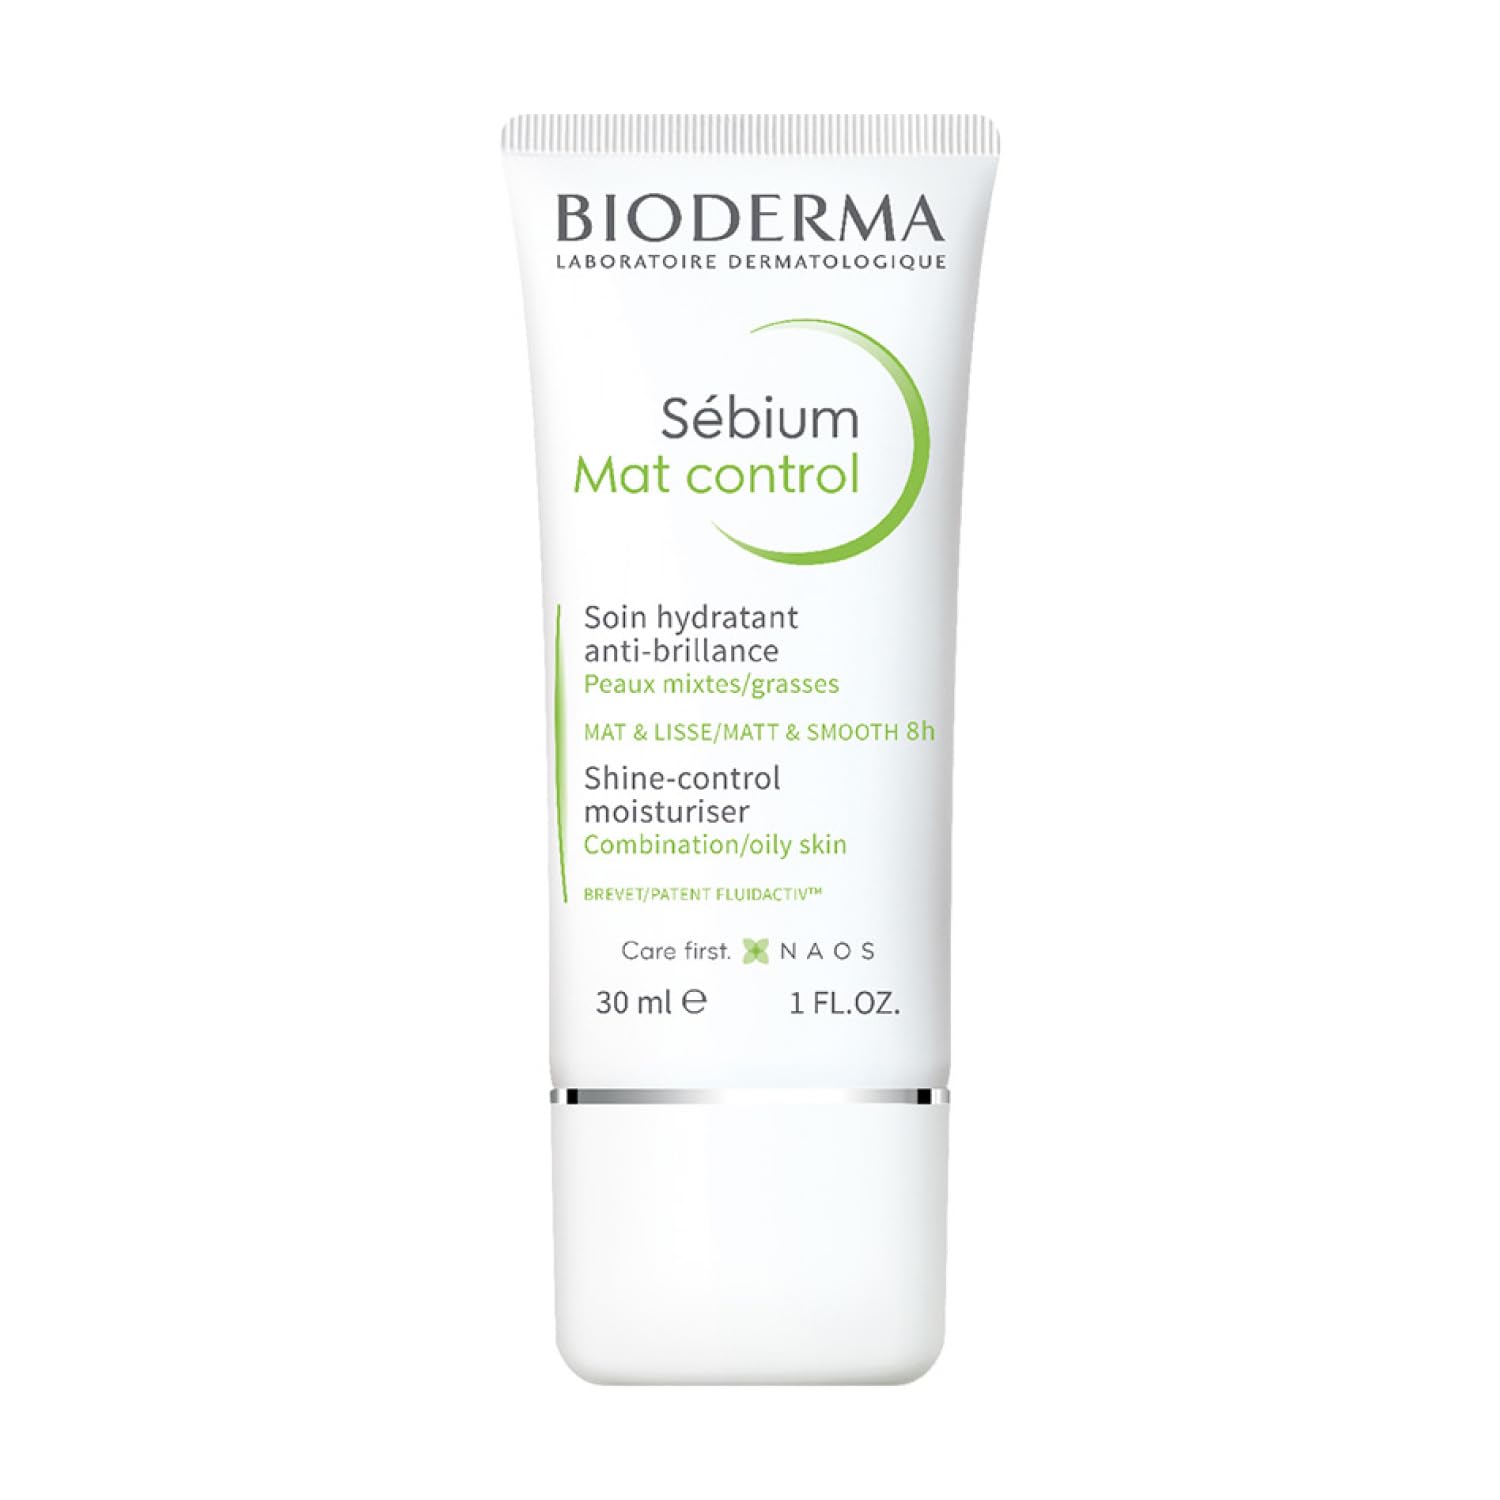 Bioderma - Sébium - Mat Control Cream - Mattifying and moisturizing daily cream - for Combination to Oily Skin - 1 fl.oz